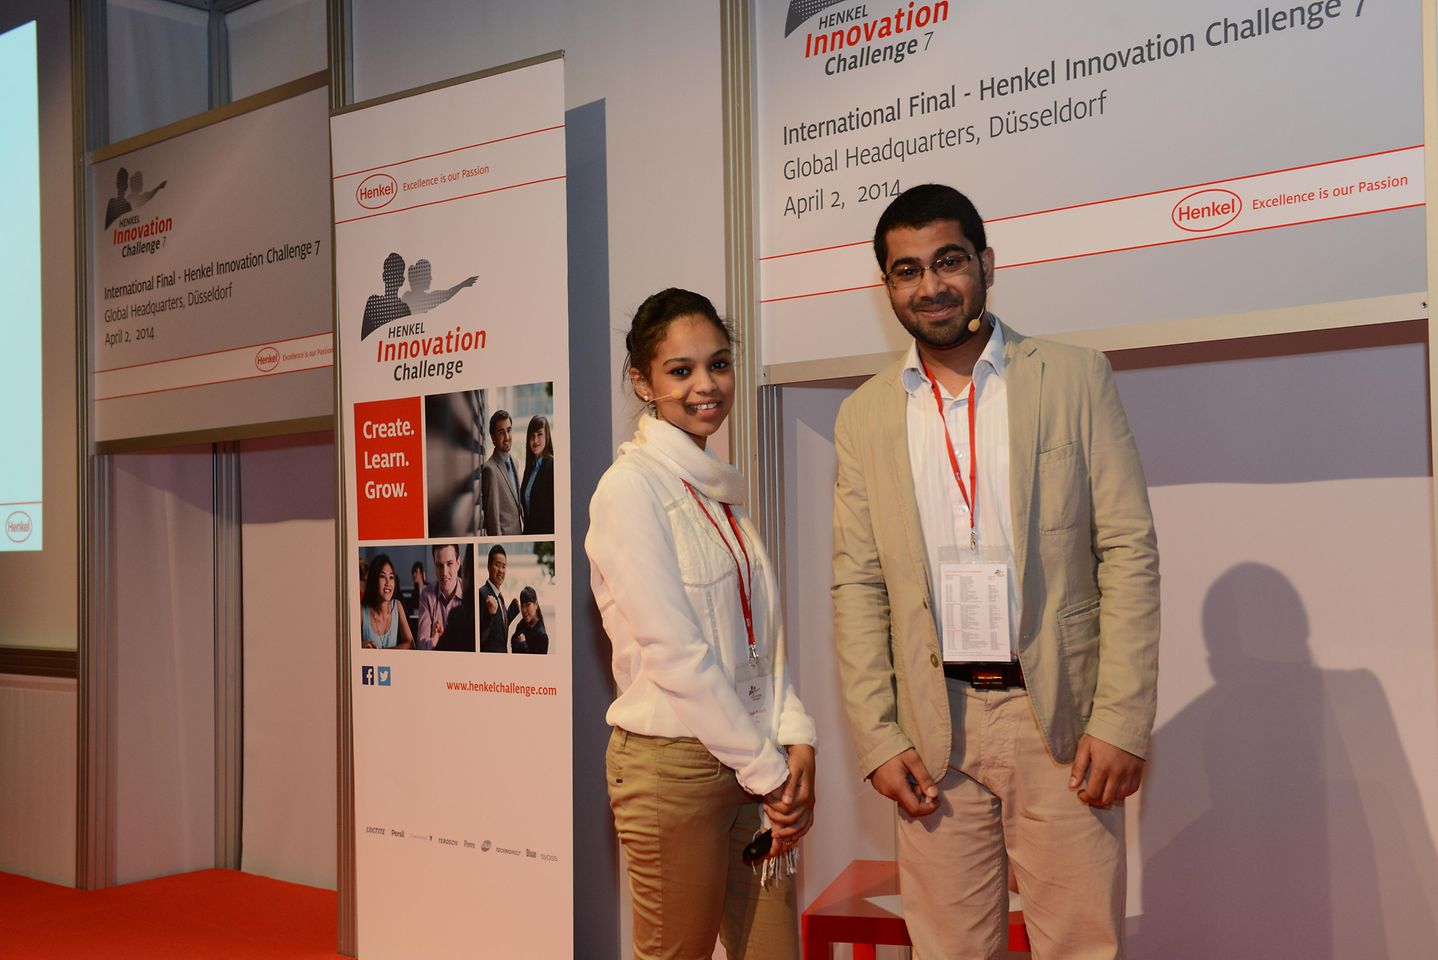 The team “Oryx” from Qatar, Jaasim Polin and Sarah Mustafa, won the second prize.